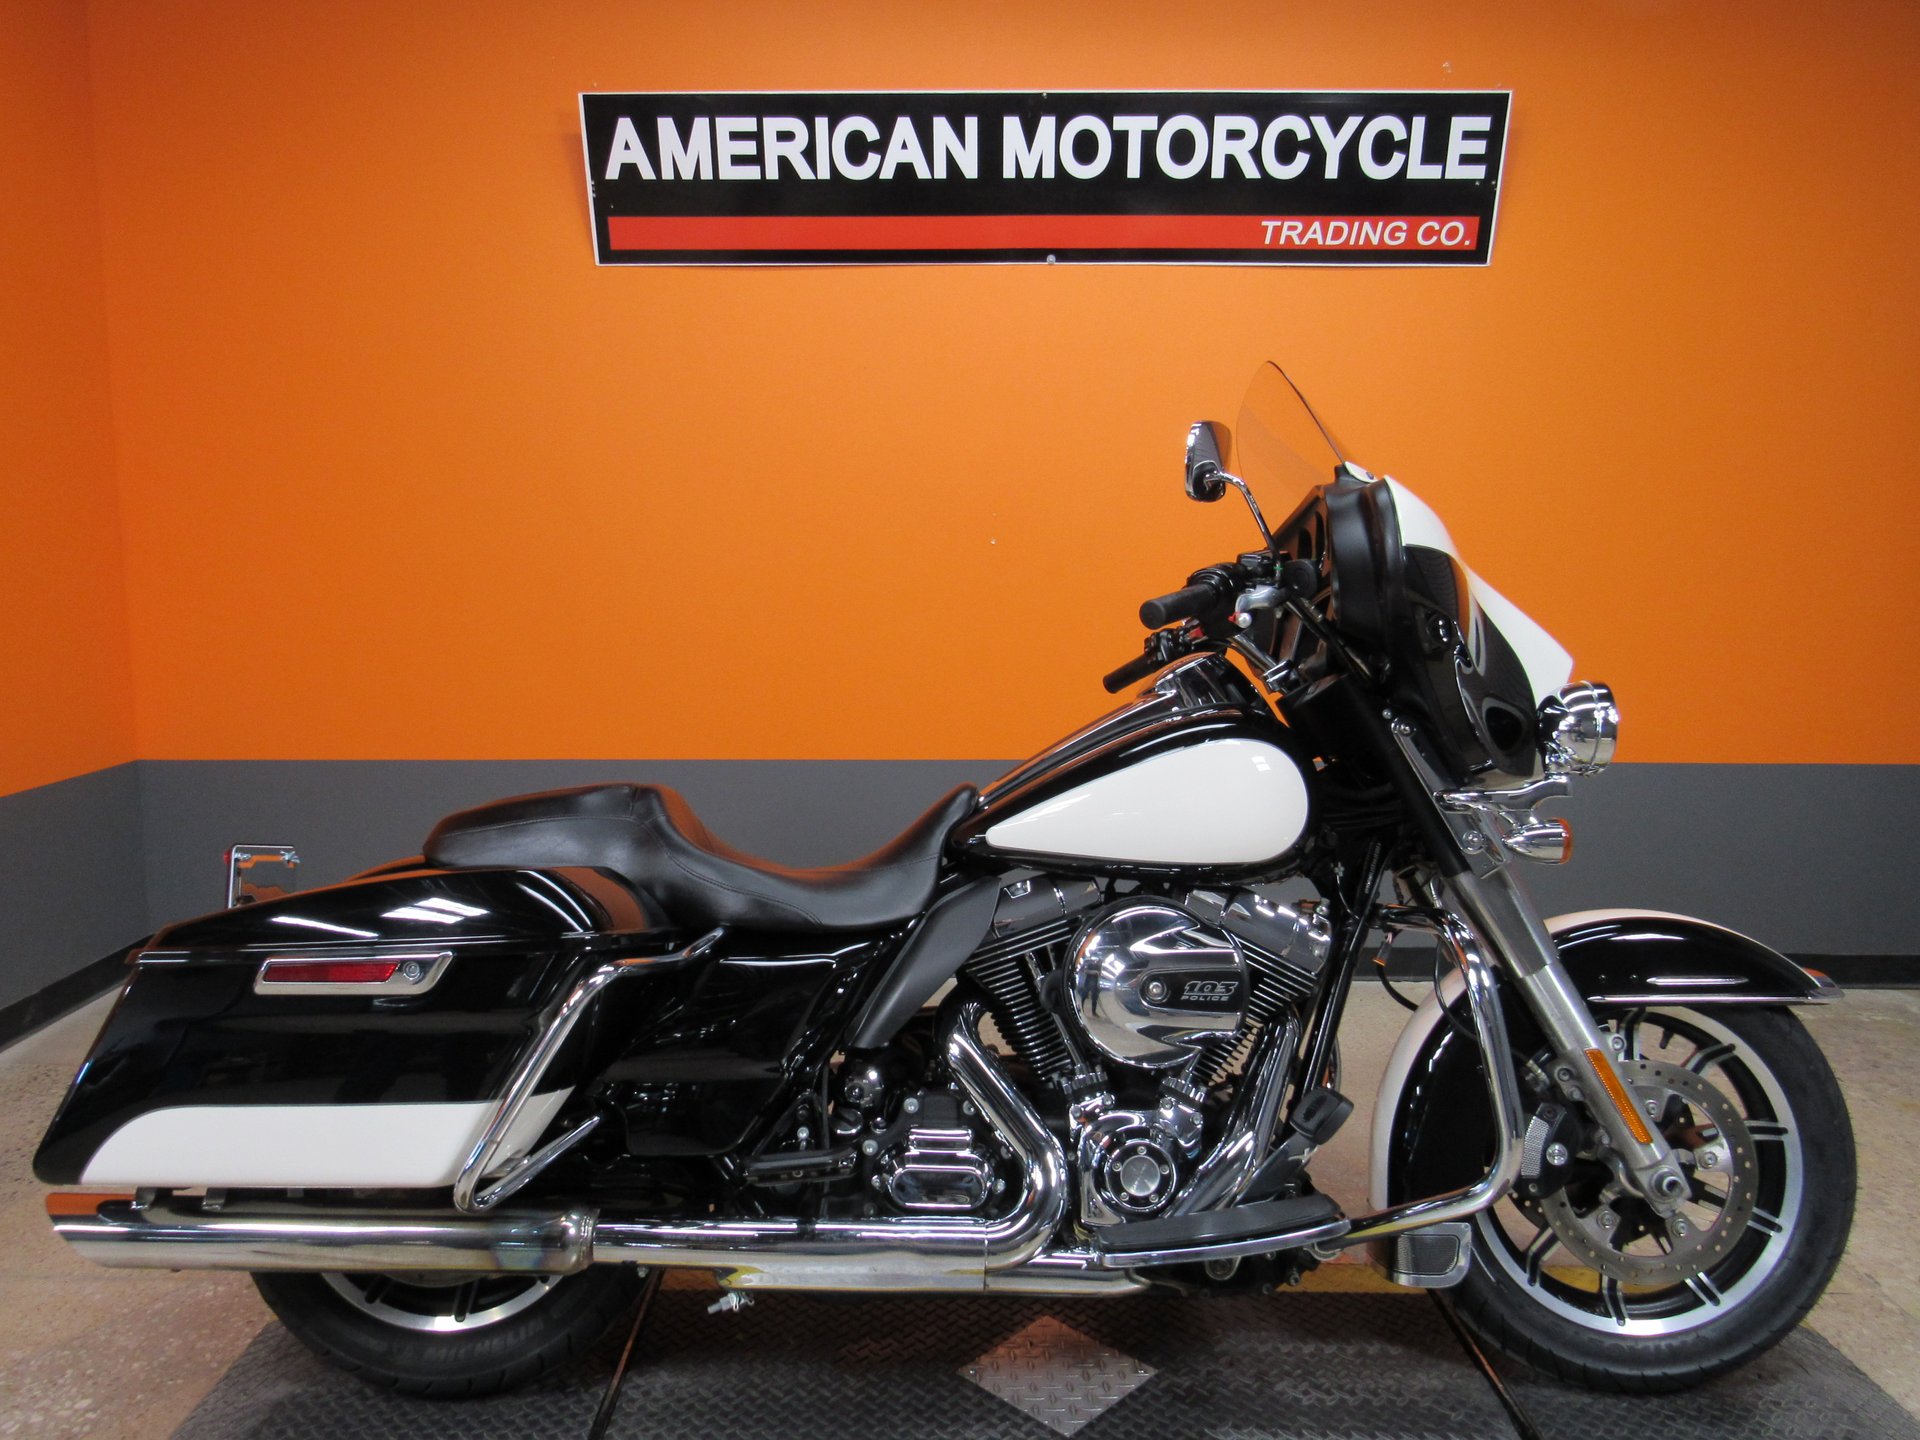 2015 Harley-Davidson Electra Glide | American Motorcycle Trading Company -  Used Harley Davidson Motorcycles